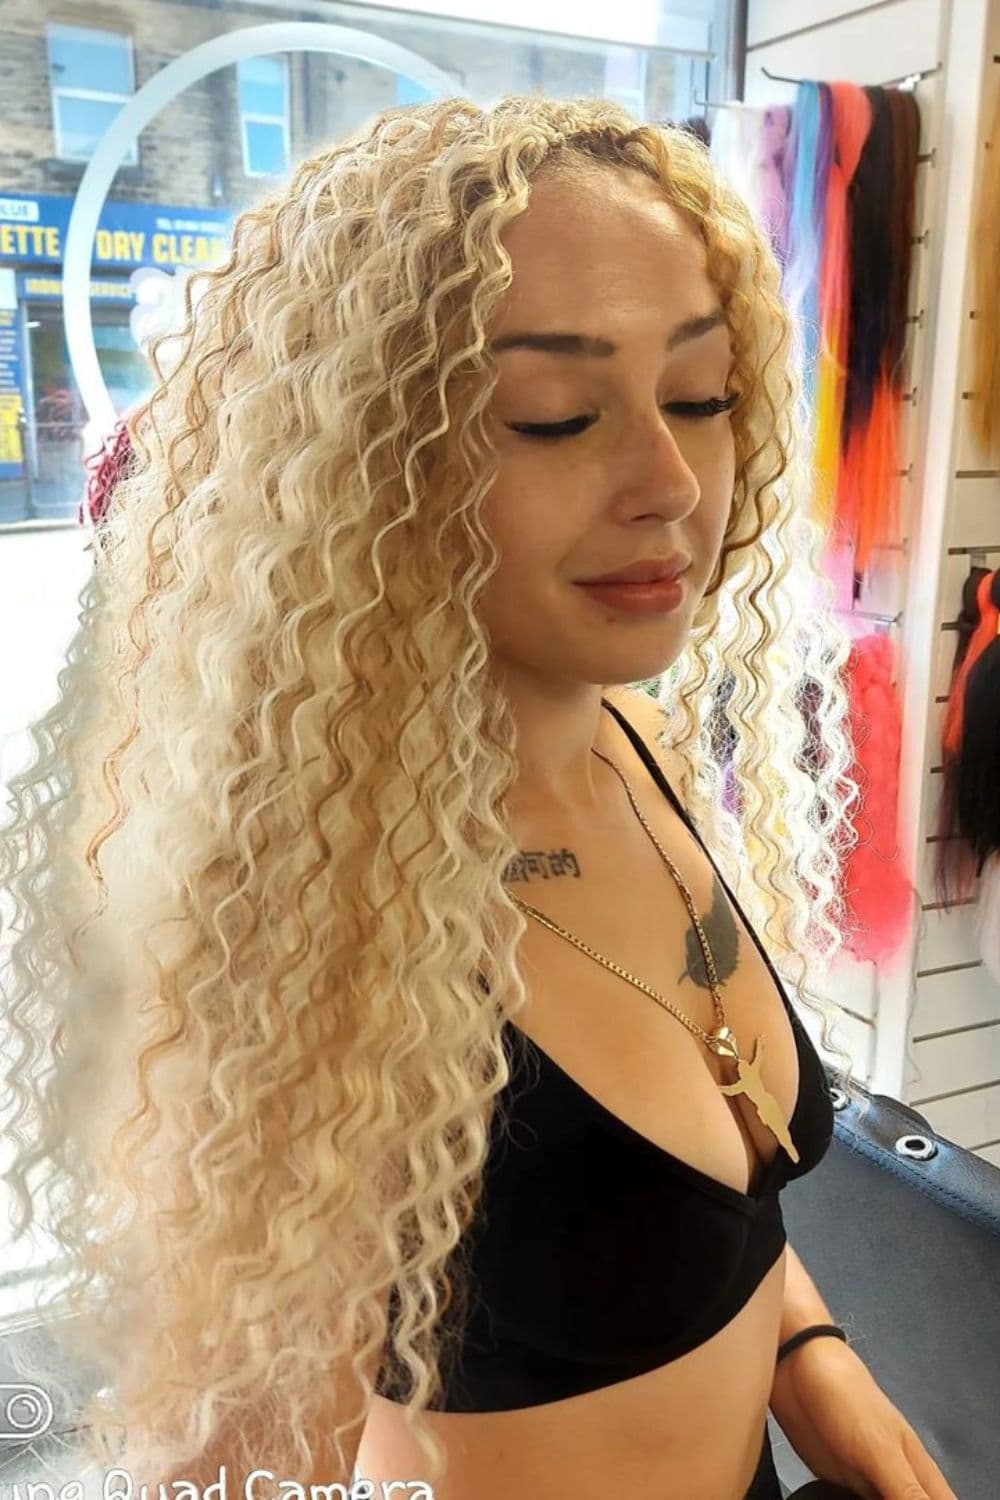 A woman with blonde crochet braids.